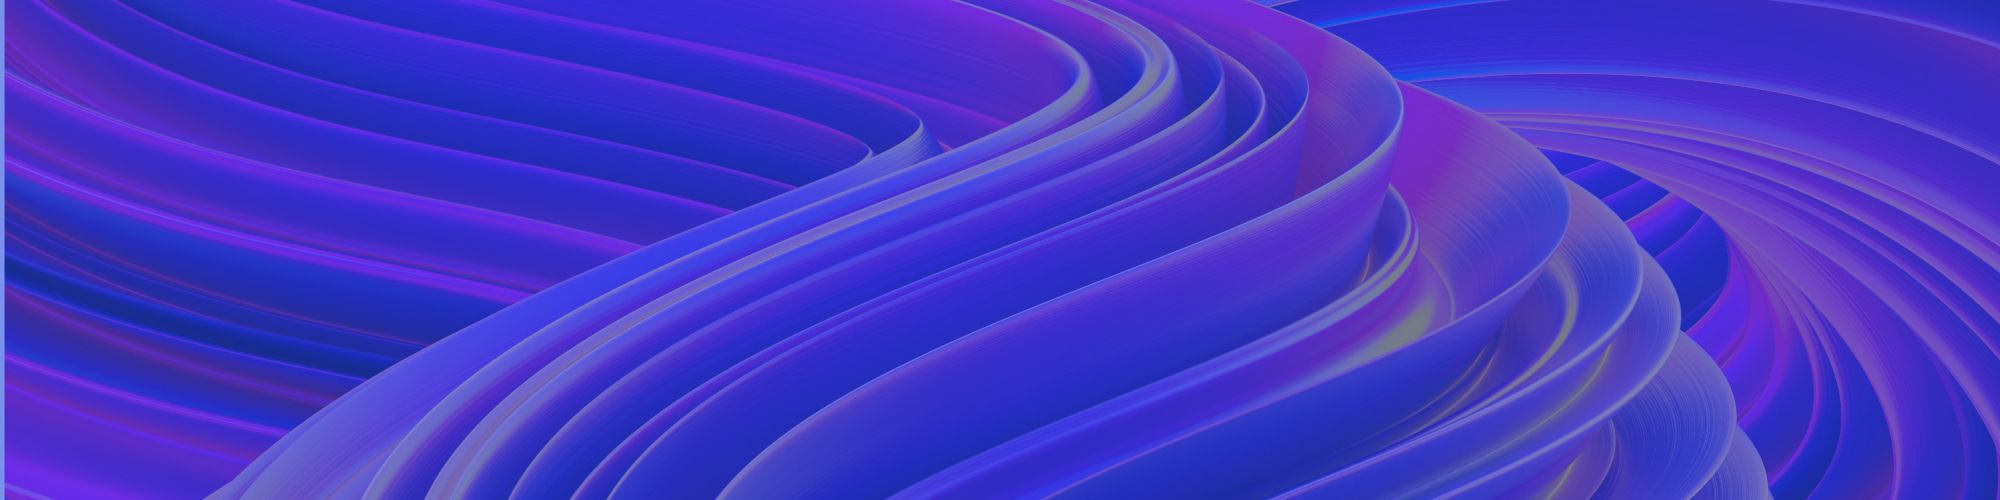 abstract-blue-purple-swirl